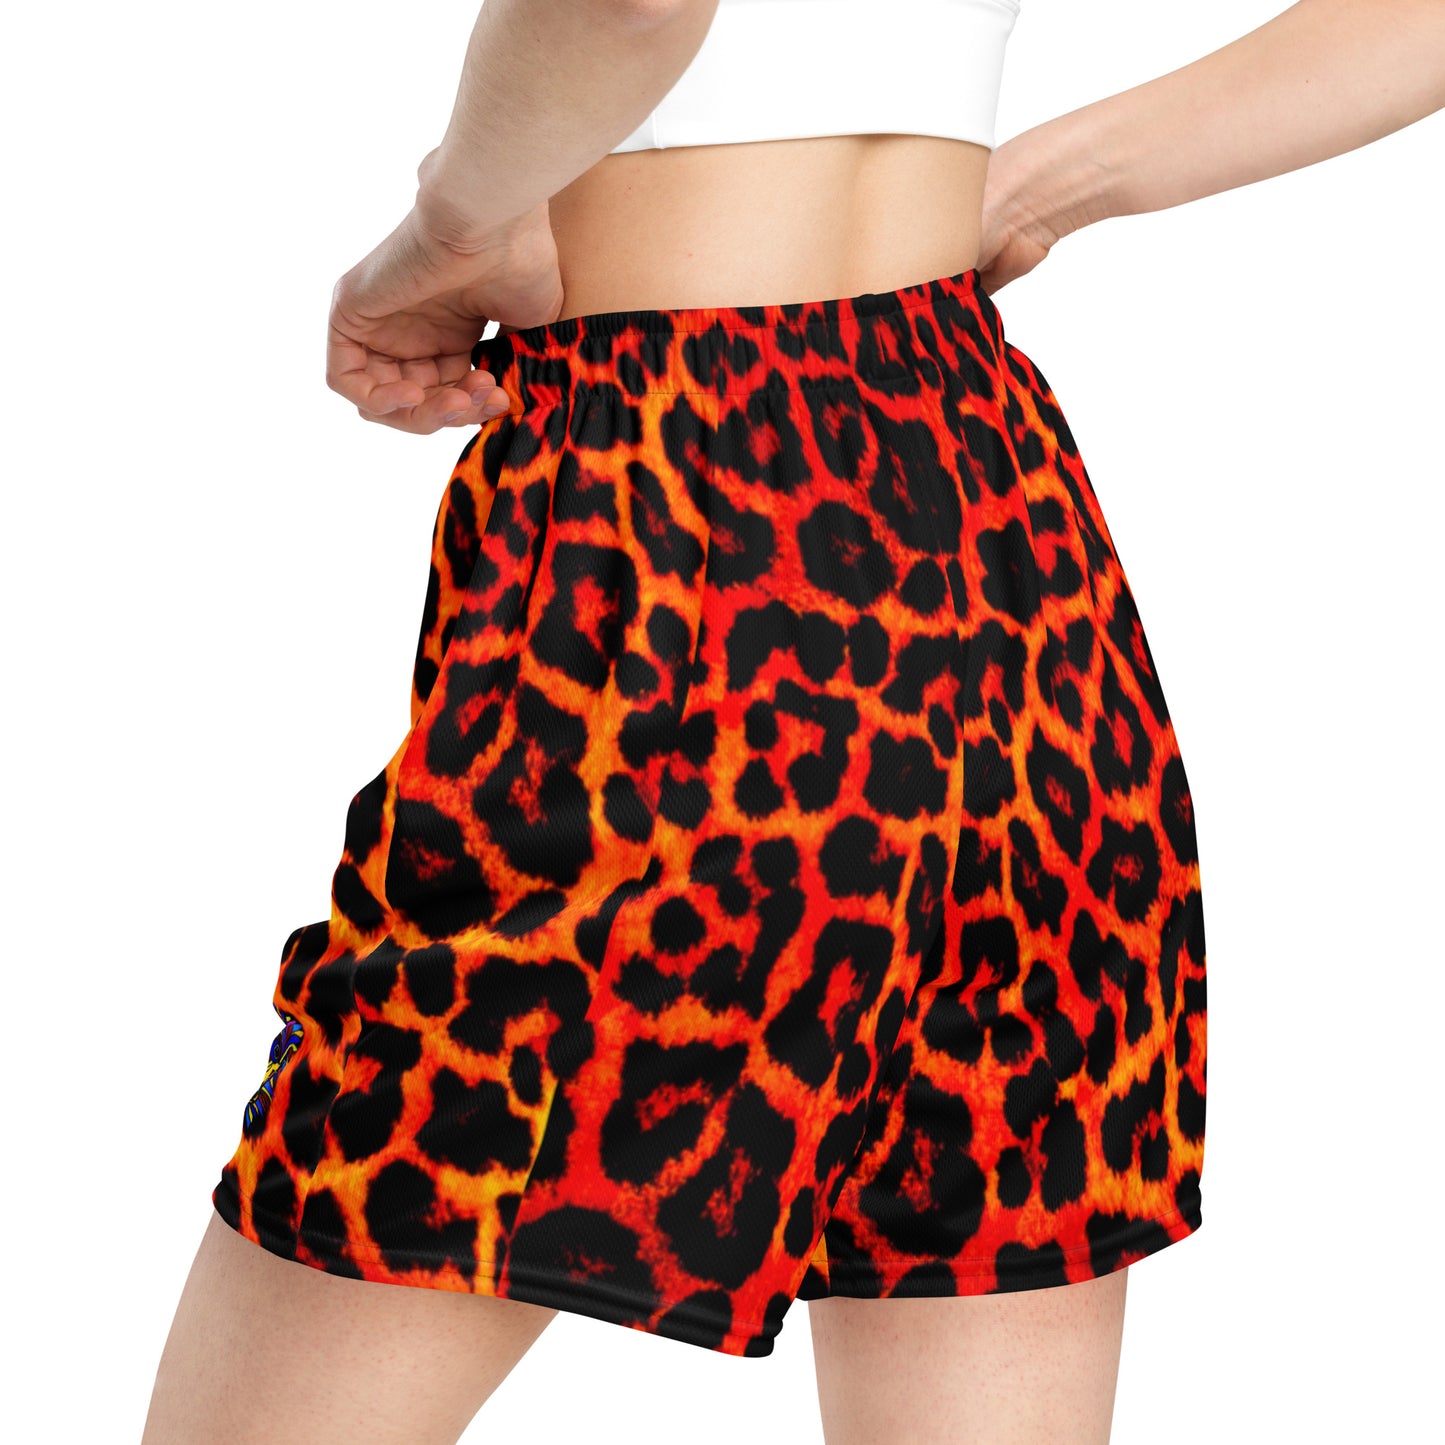 Mesh shorts- Blazing Cheetah - DMD Bags